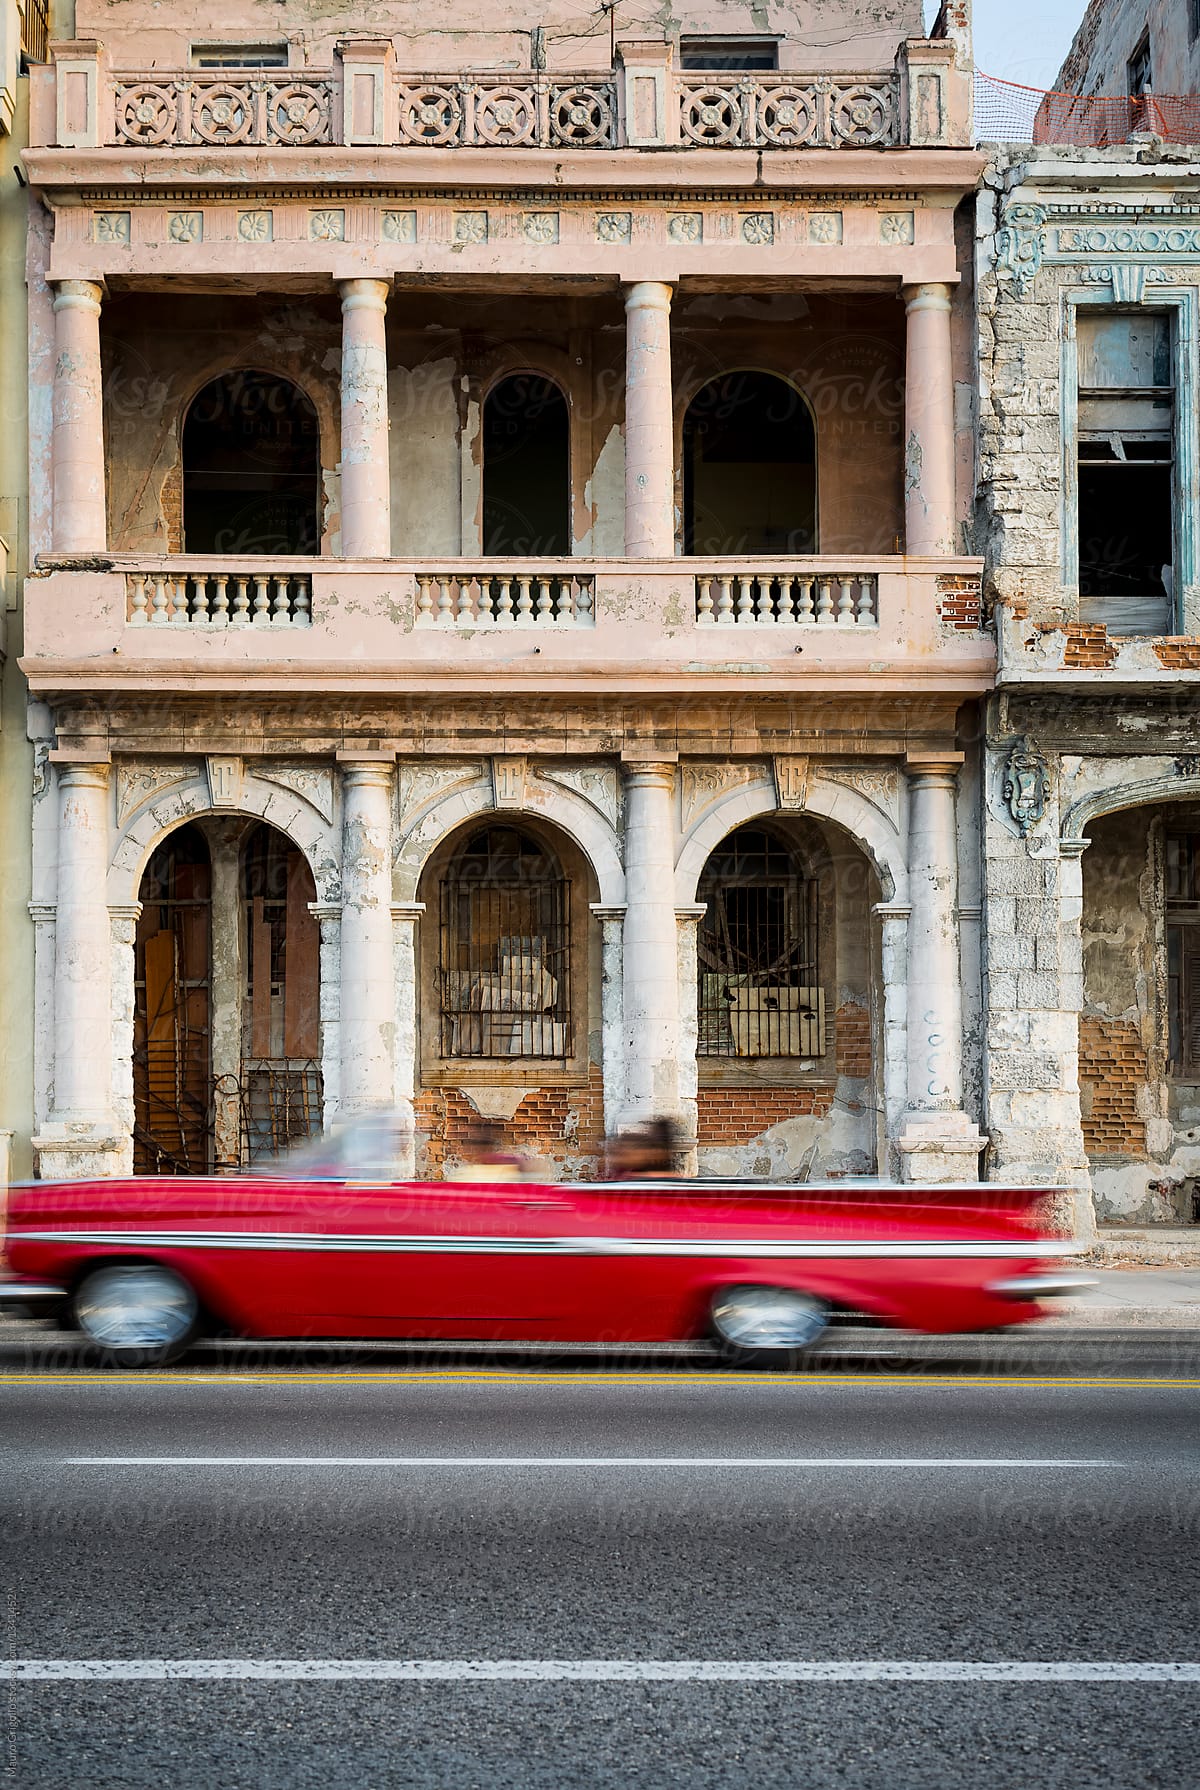 Vintage American car in Cuba